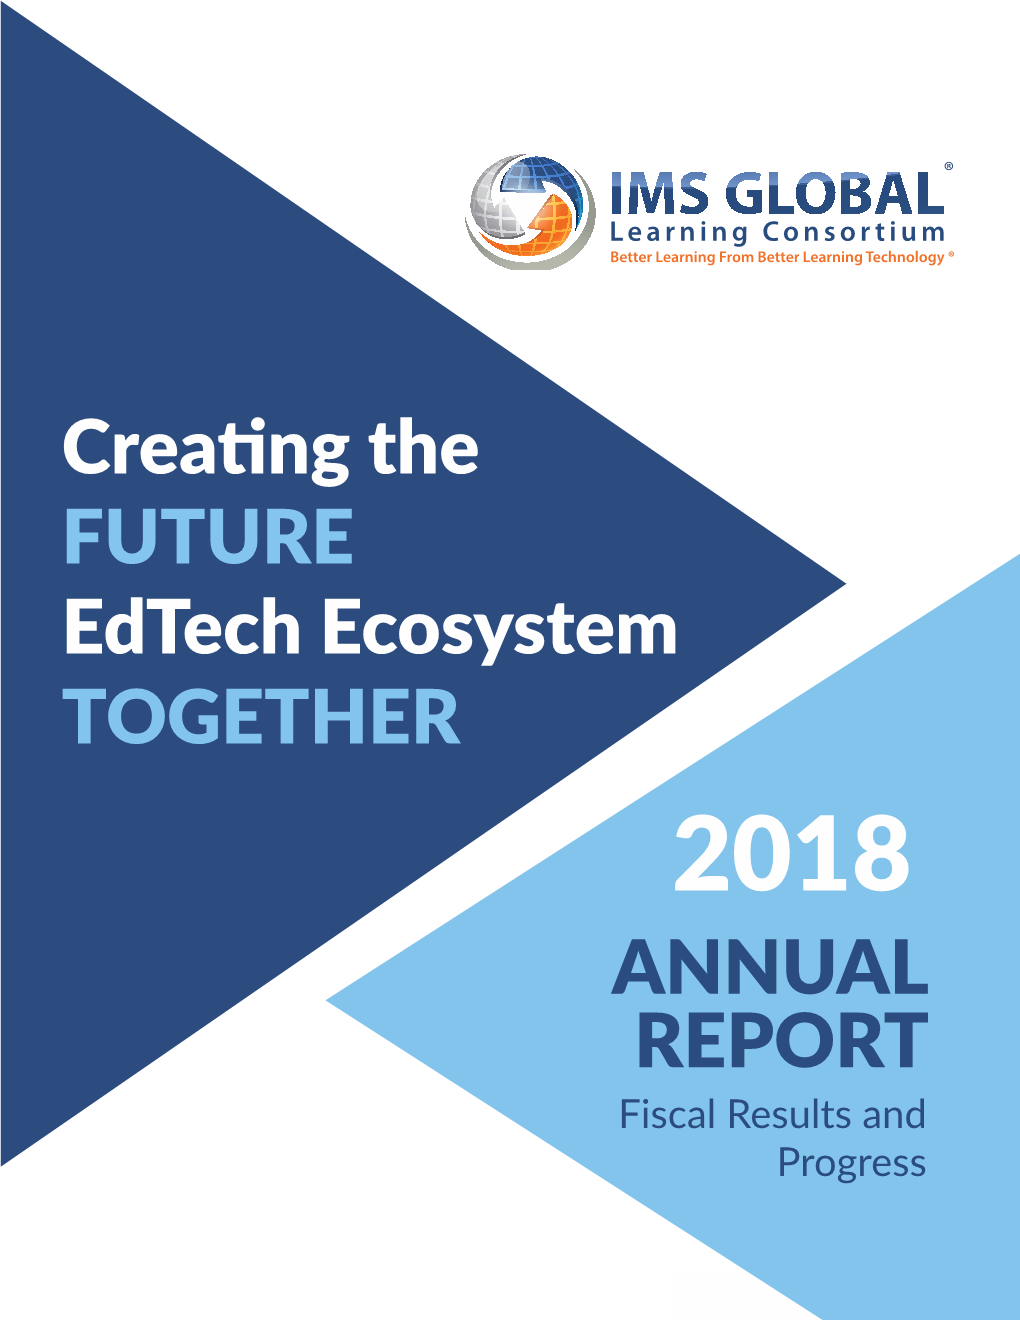 IMS Annual Report